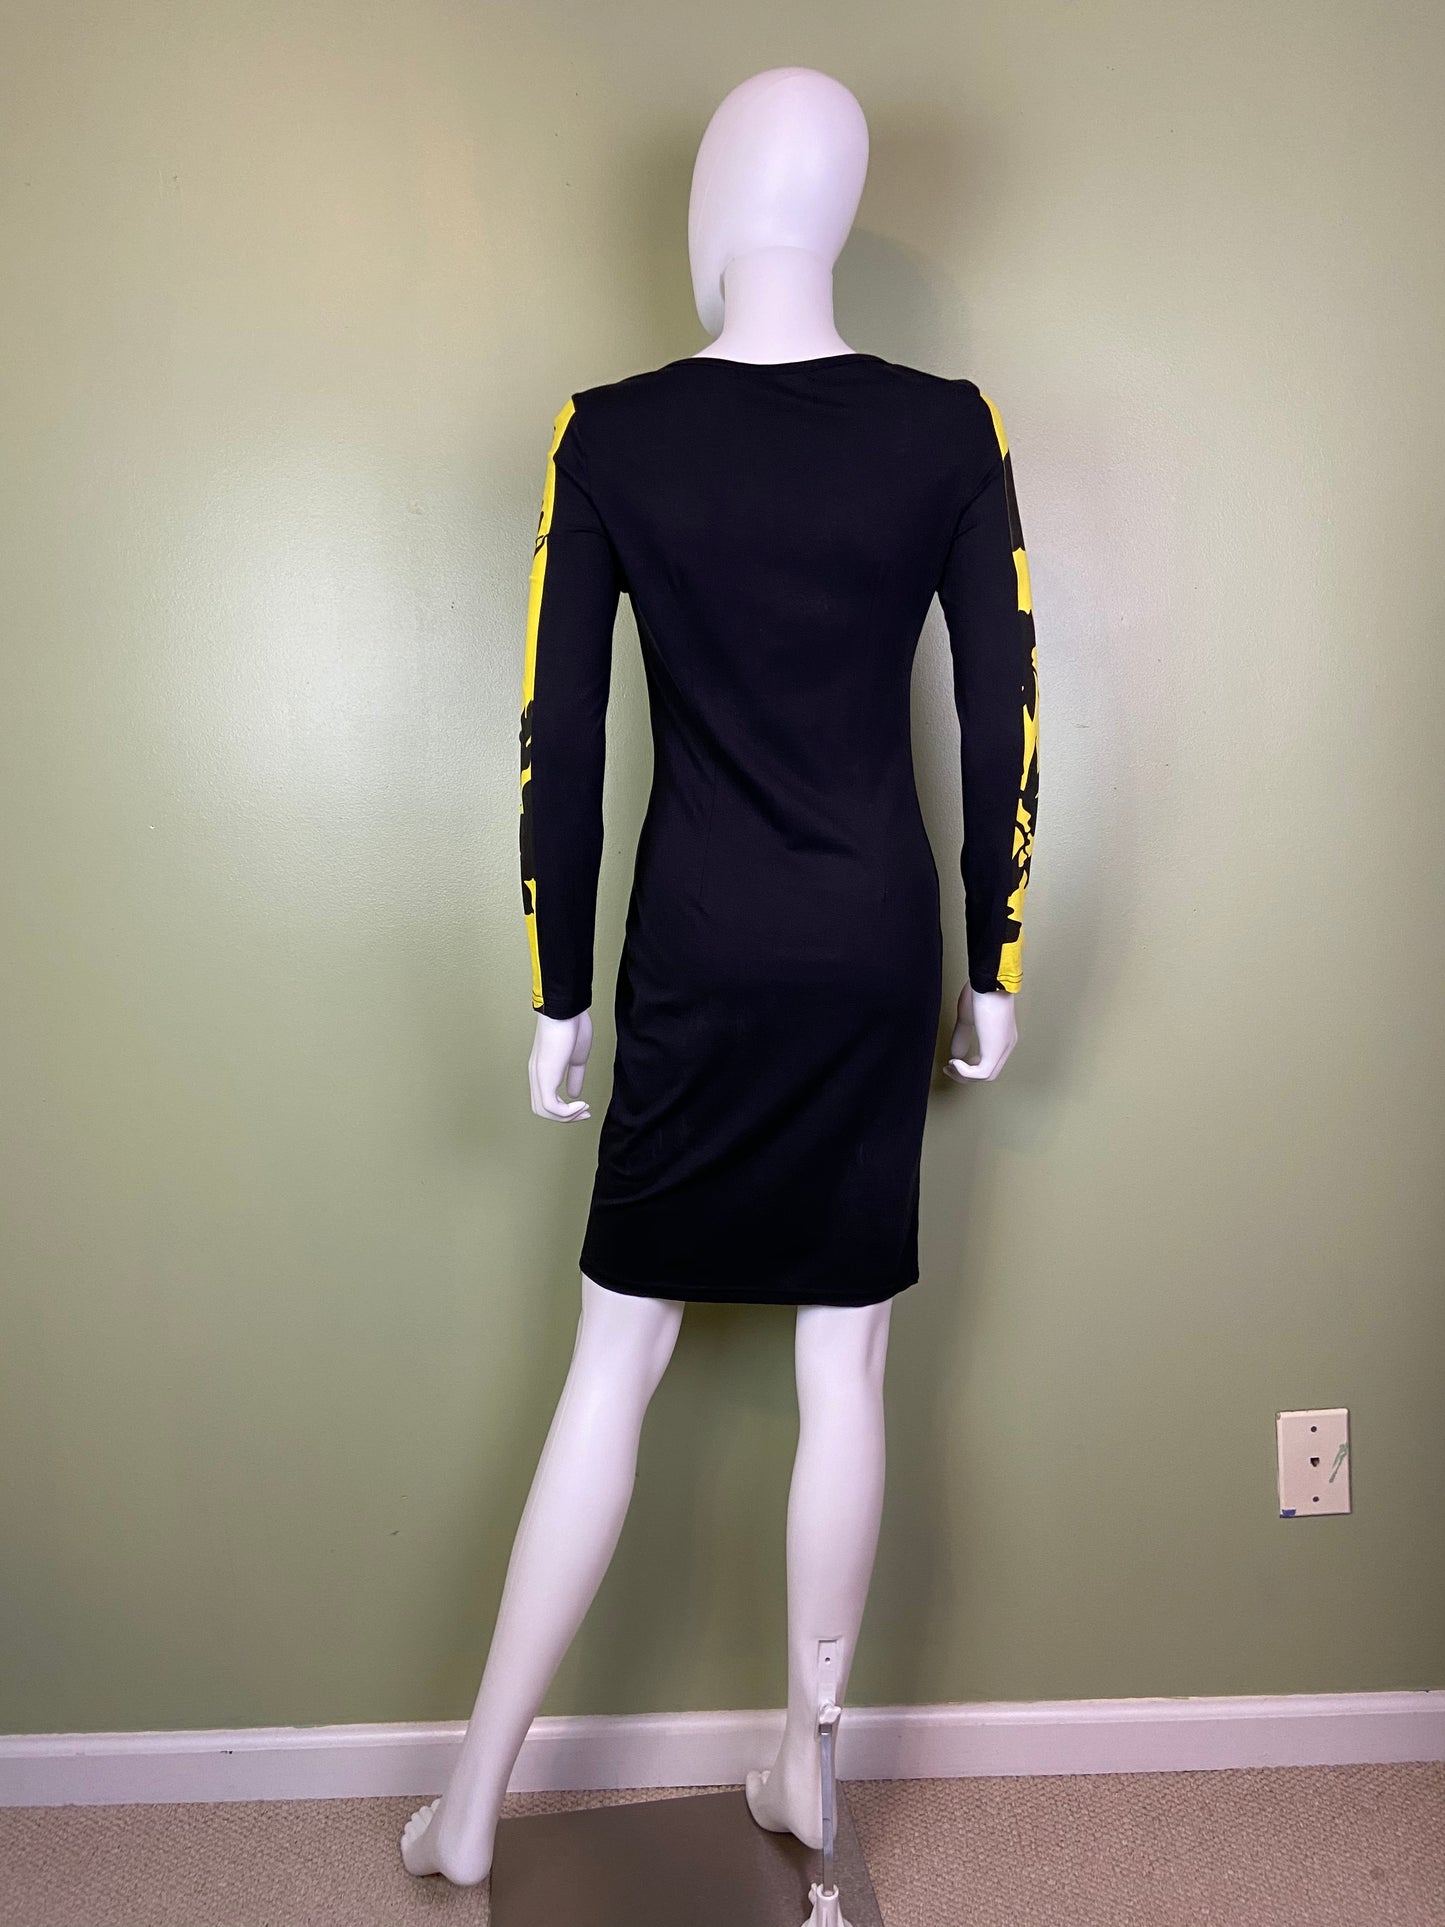 Black Yellow Graphic Print Cotton Stretch Dress